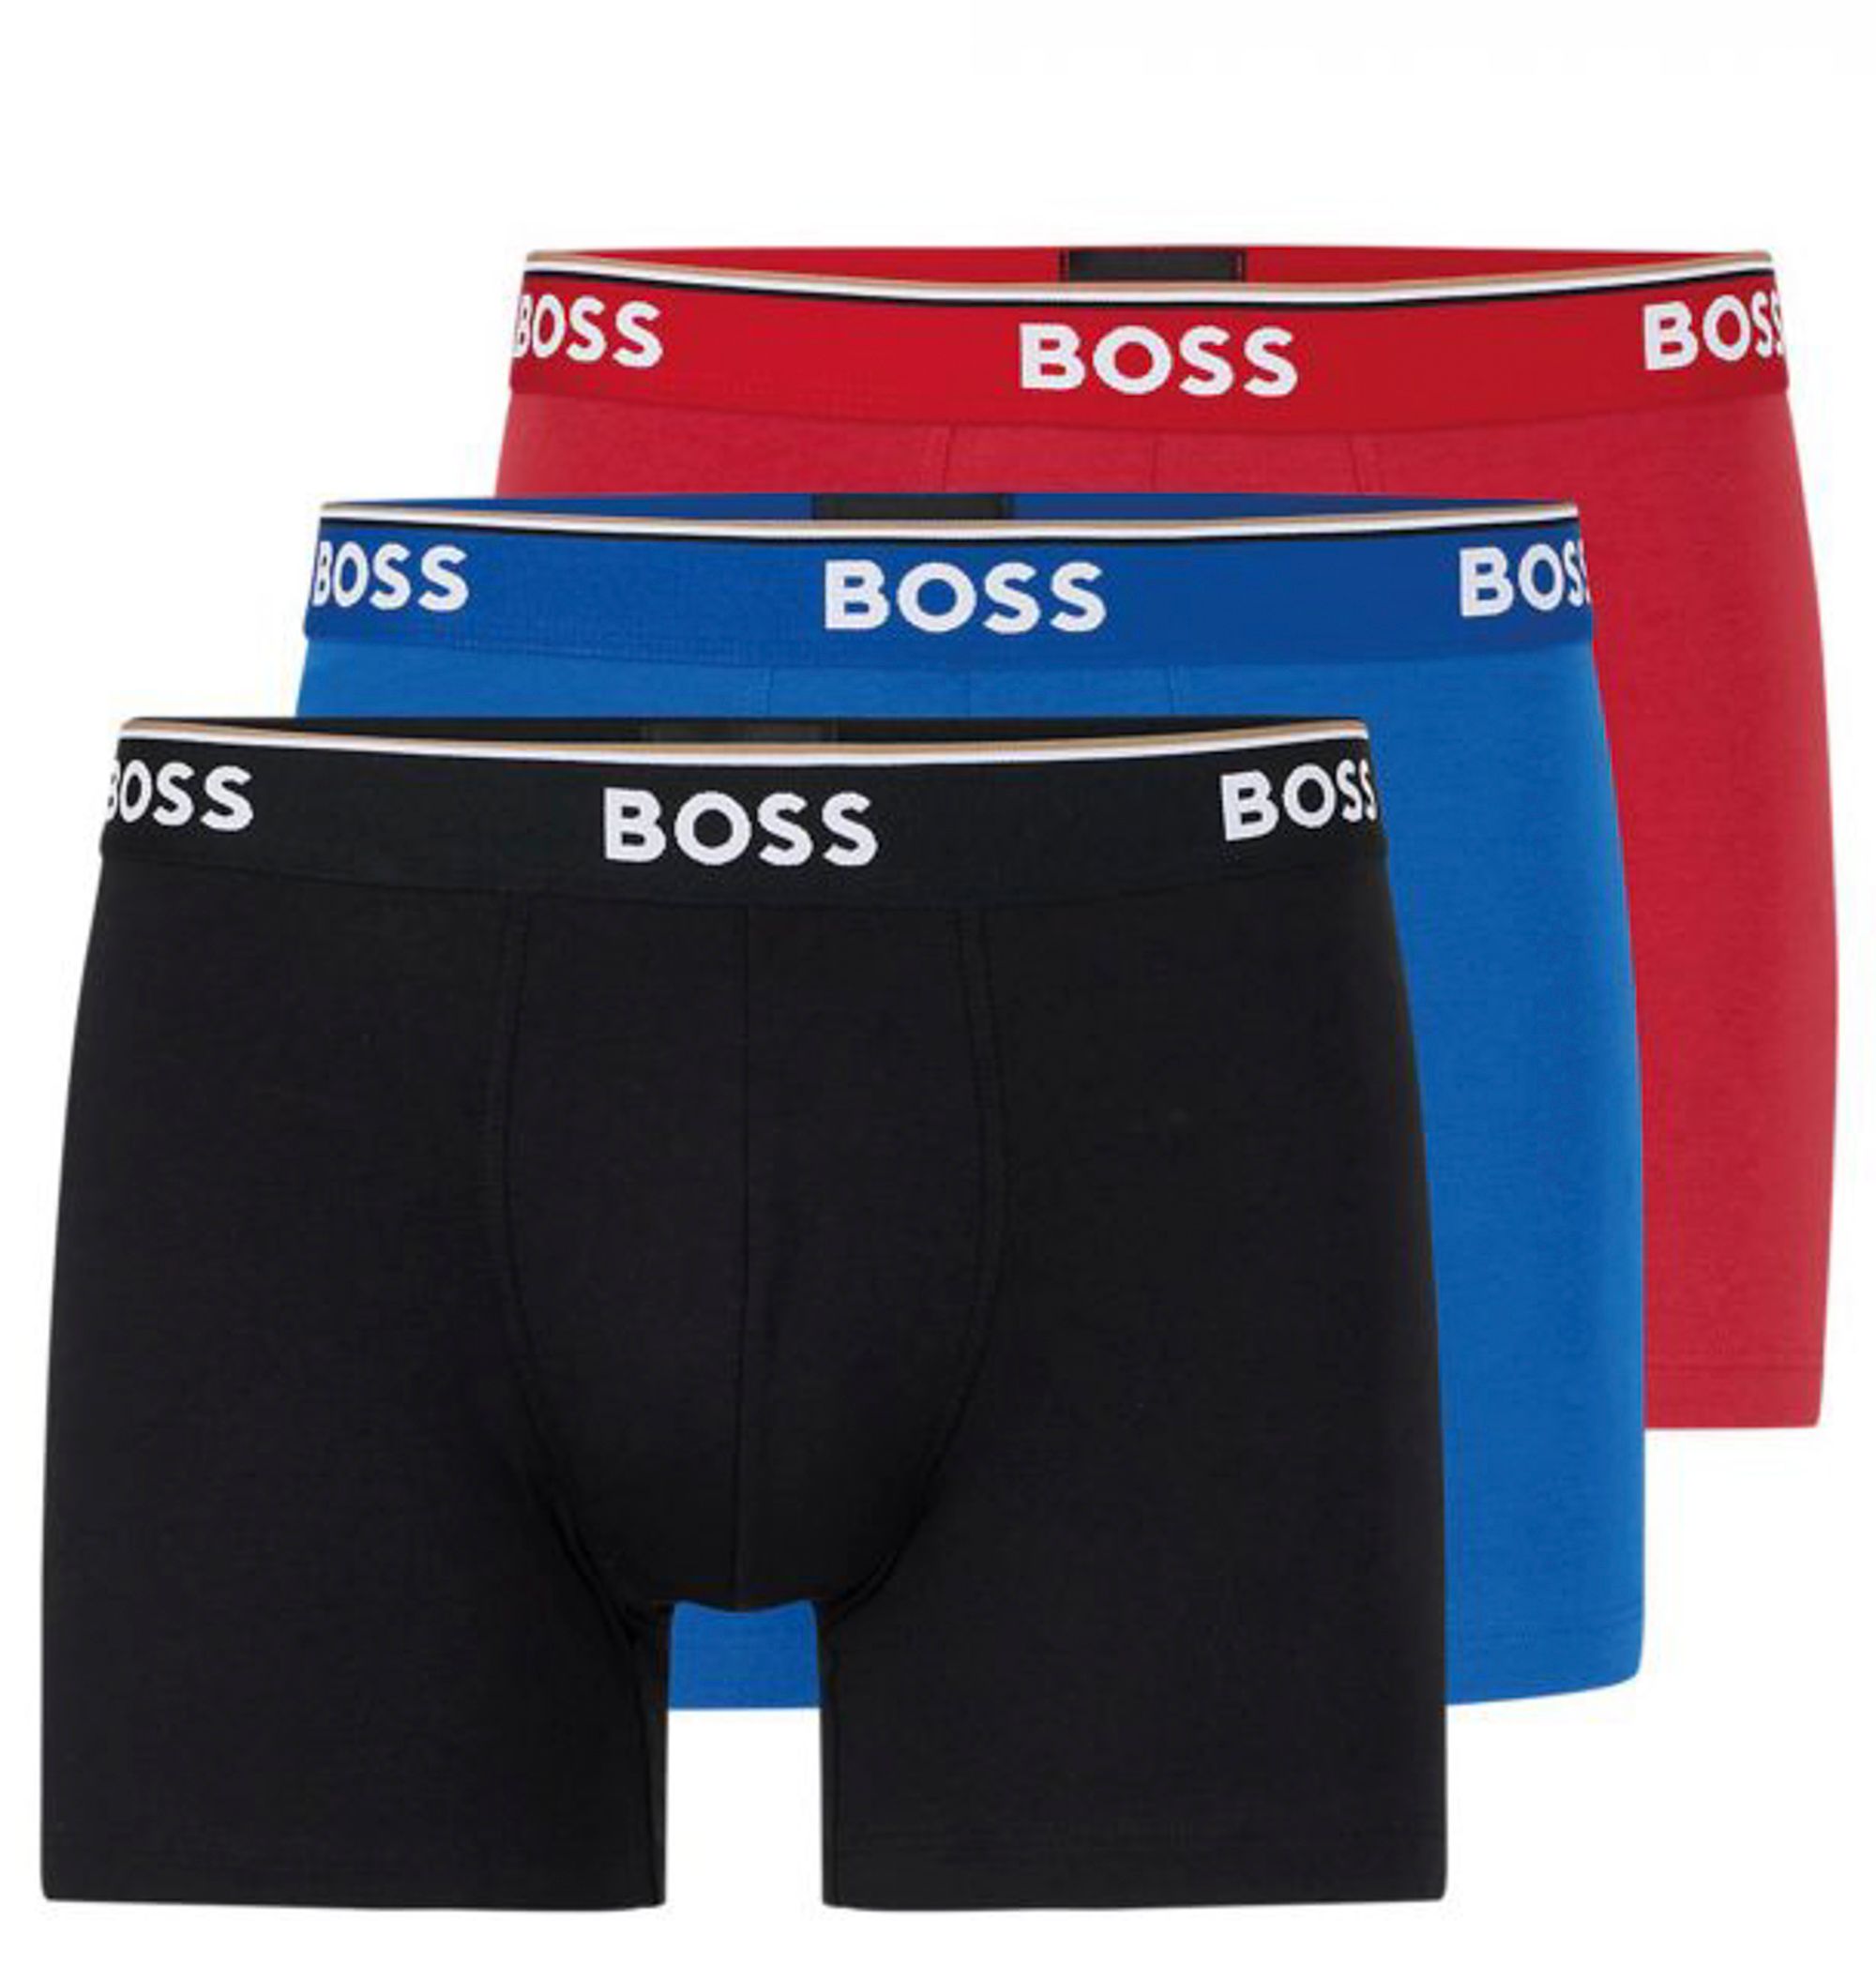 Boss Boxershort 3-pack Rood 082266-003-L